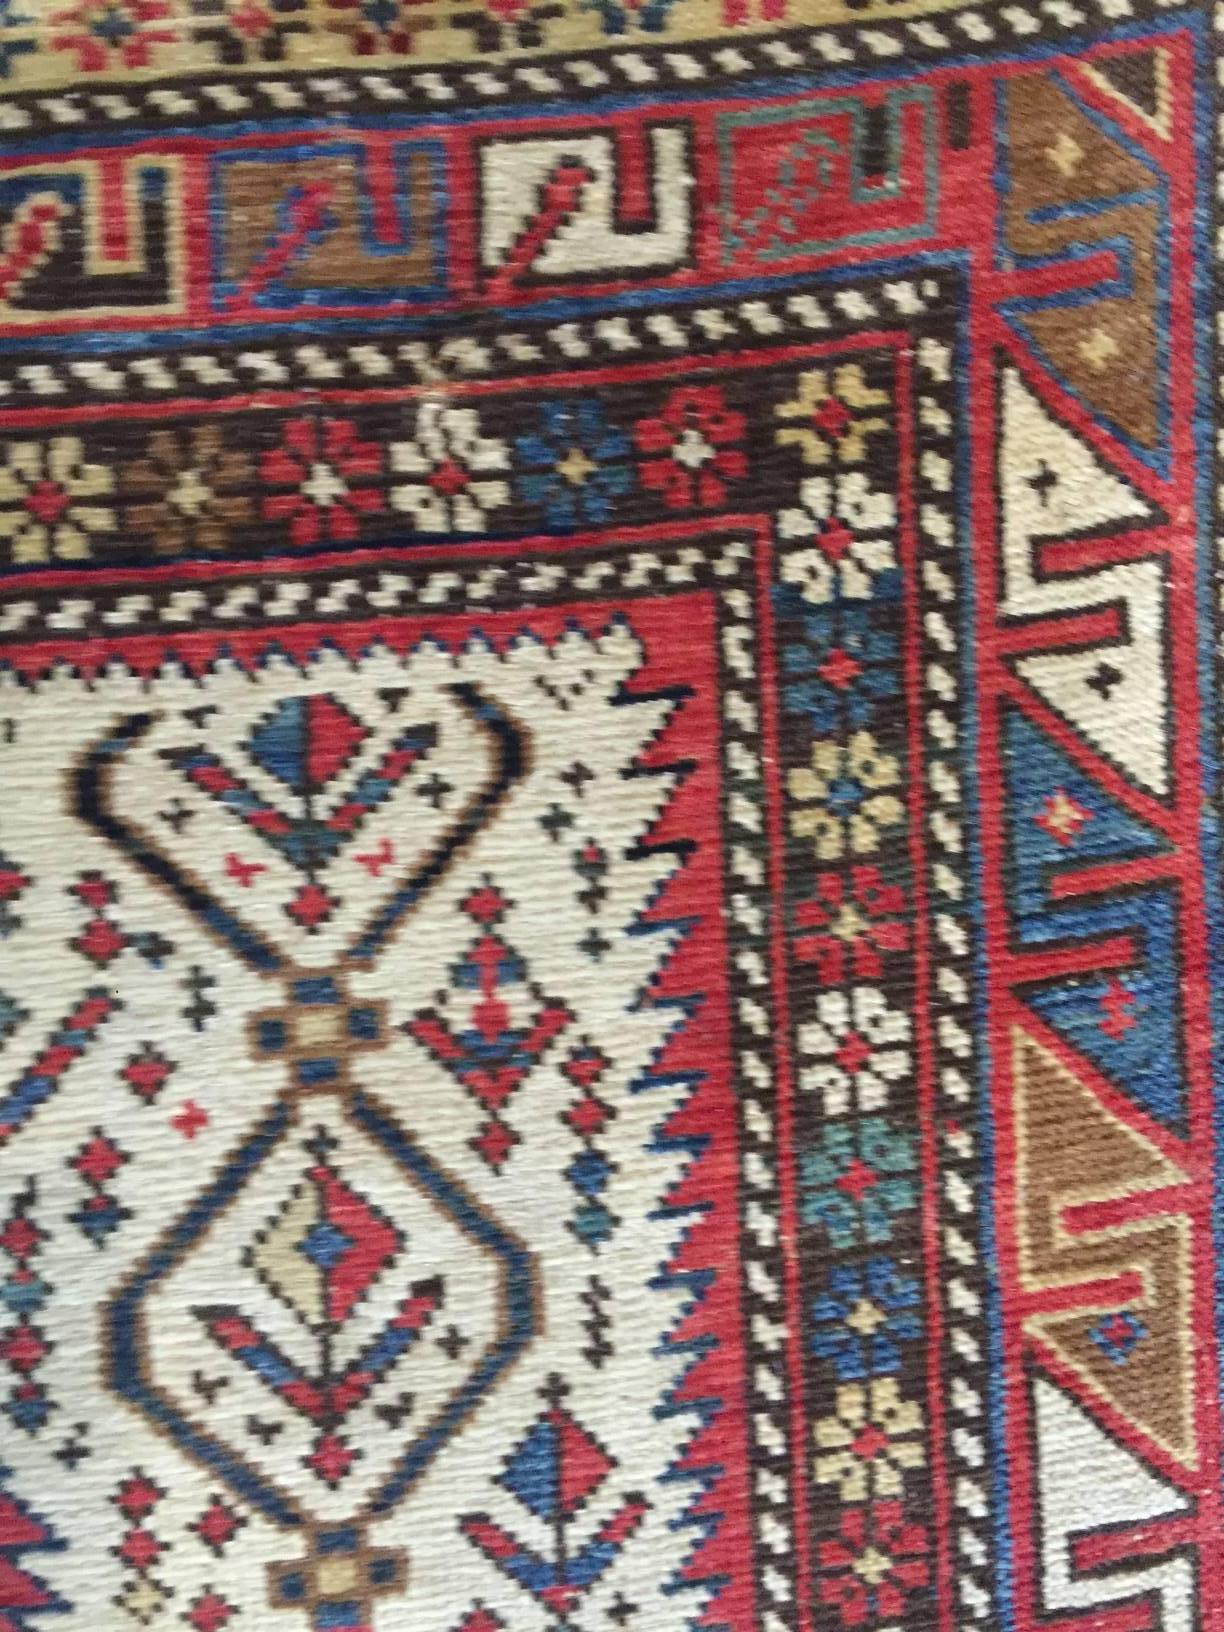 Azerbaijani Wonderful 19th Century Prayer Rug For Sale